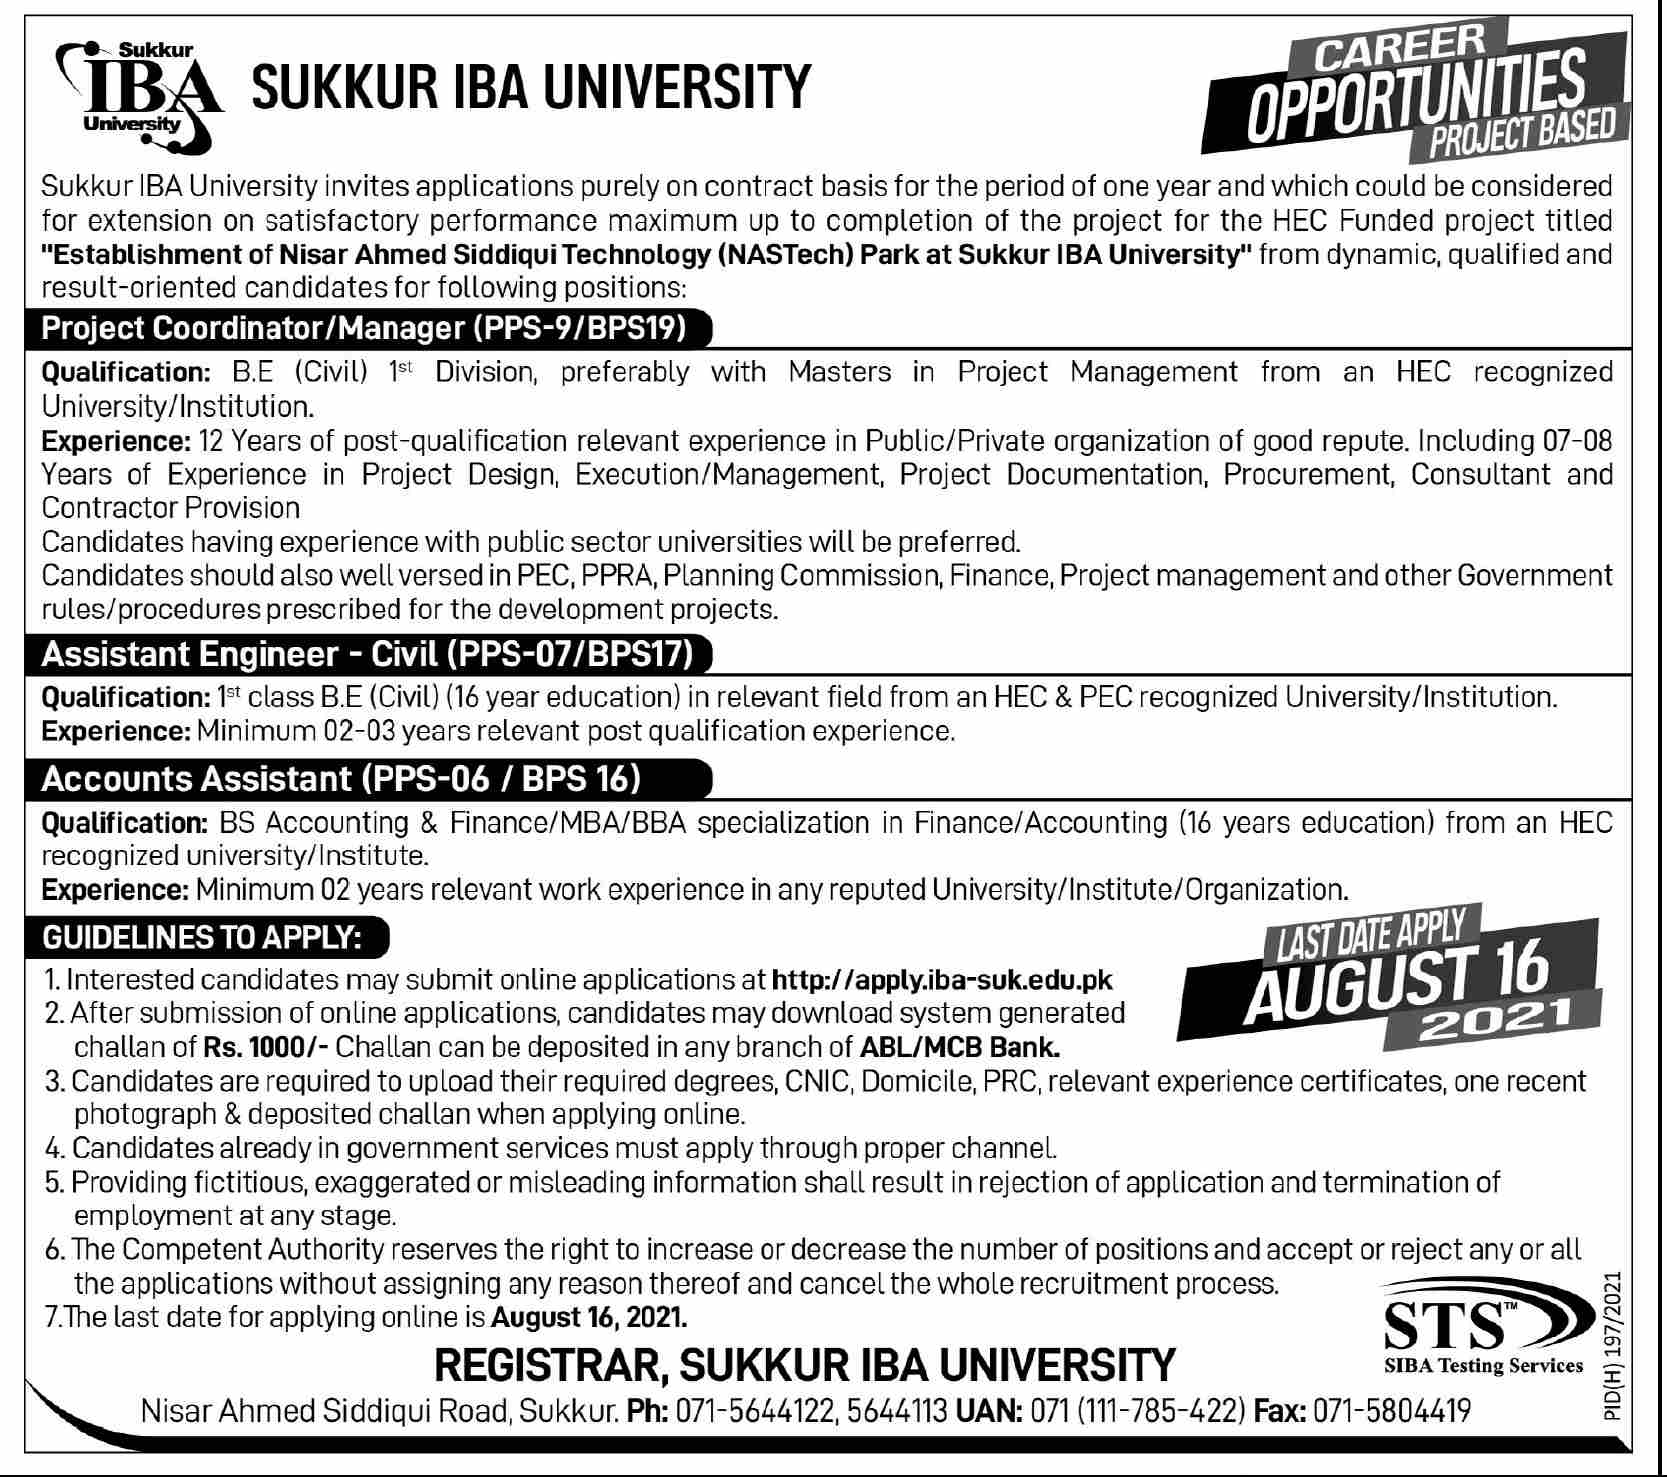 Accounts Assistant new Jobs in Sukkur IBA University